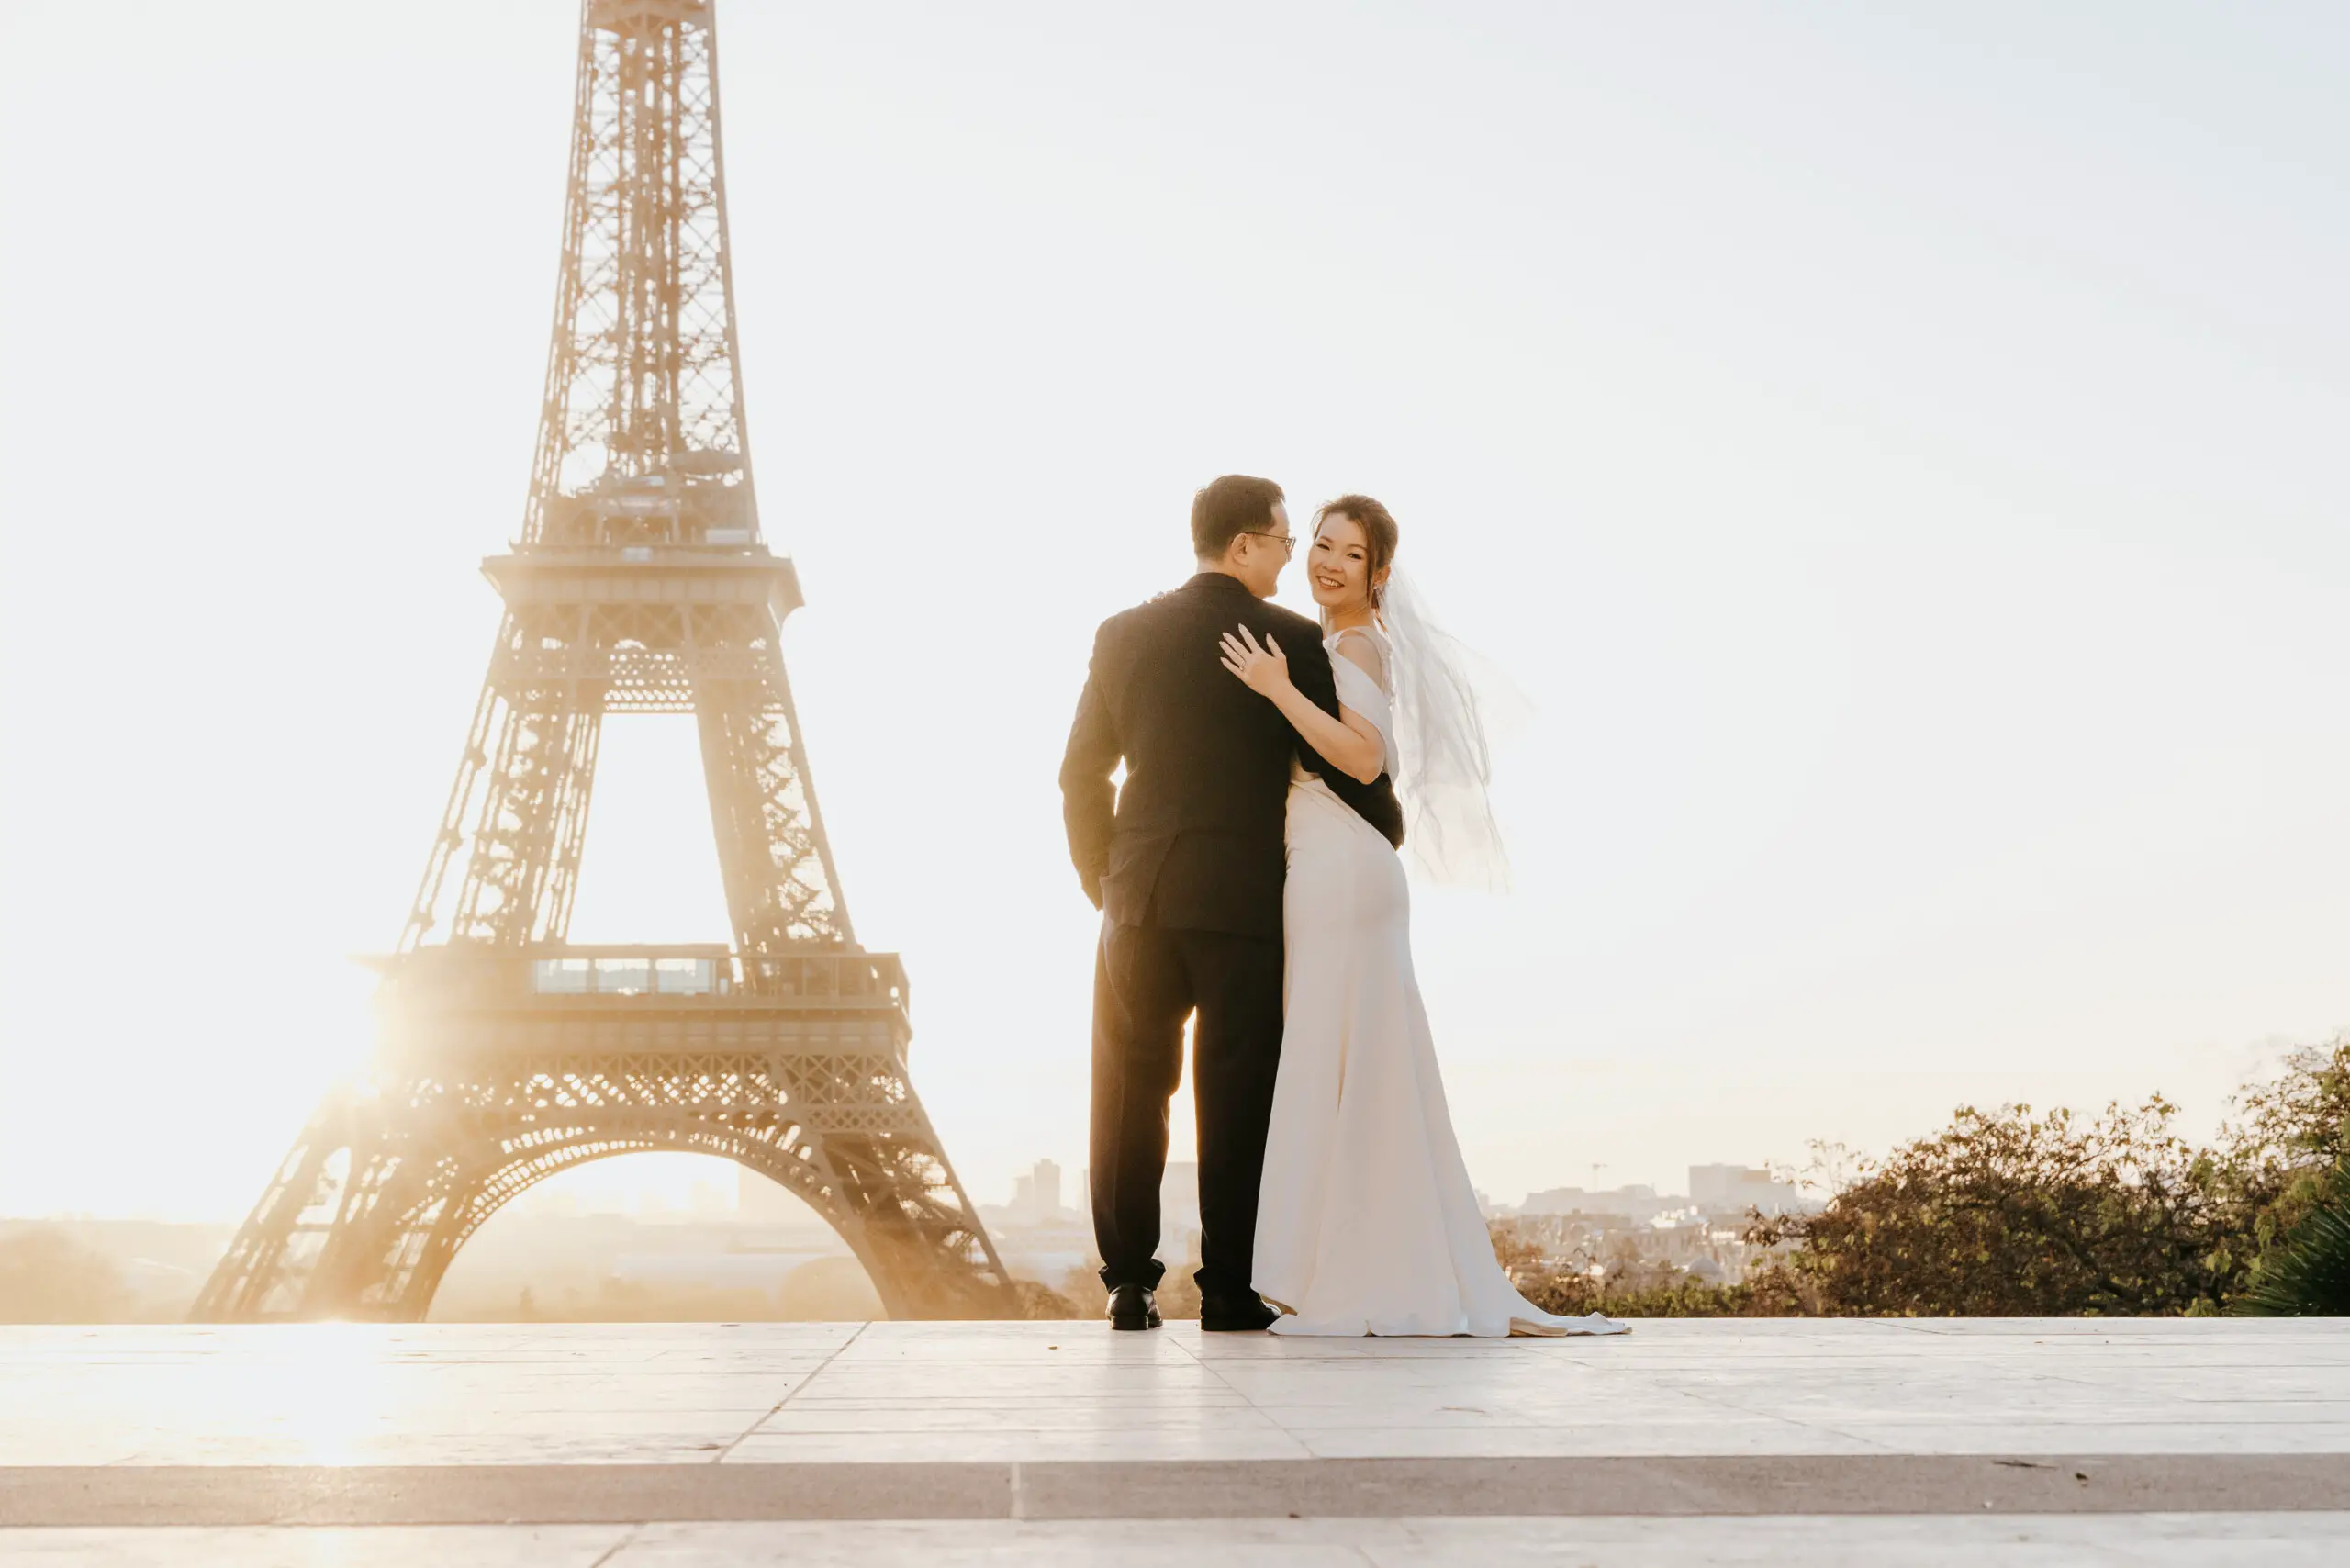 Wedding photoshoot by Daniel, Localgrapher in Paris